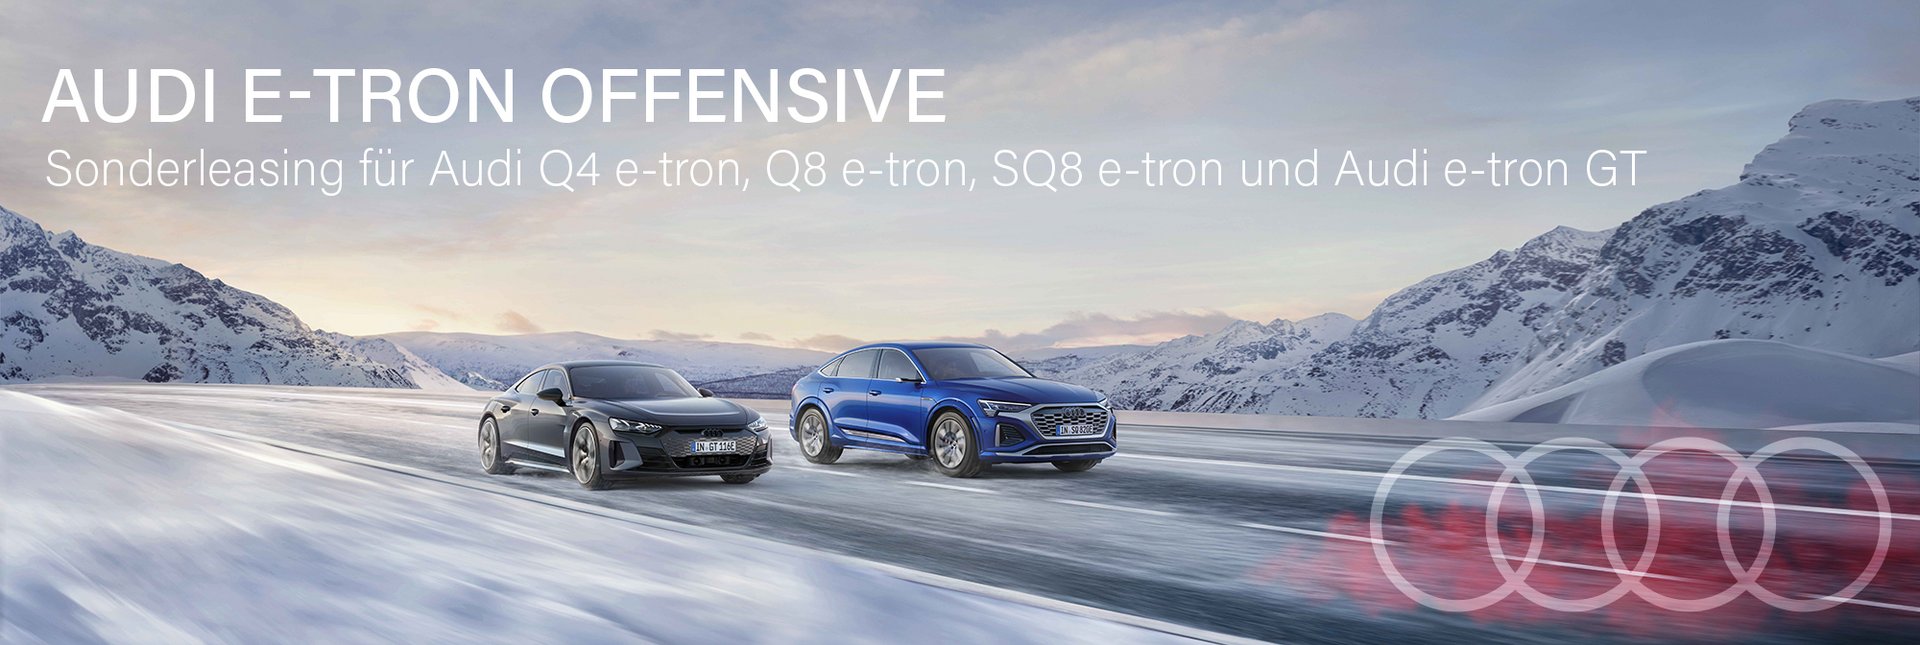 Audi e-tron Offensive